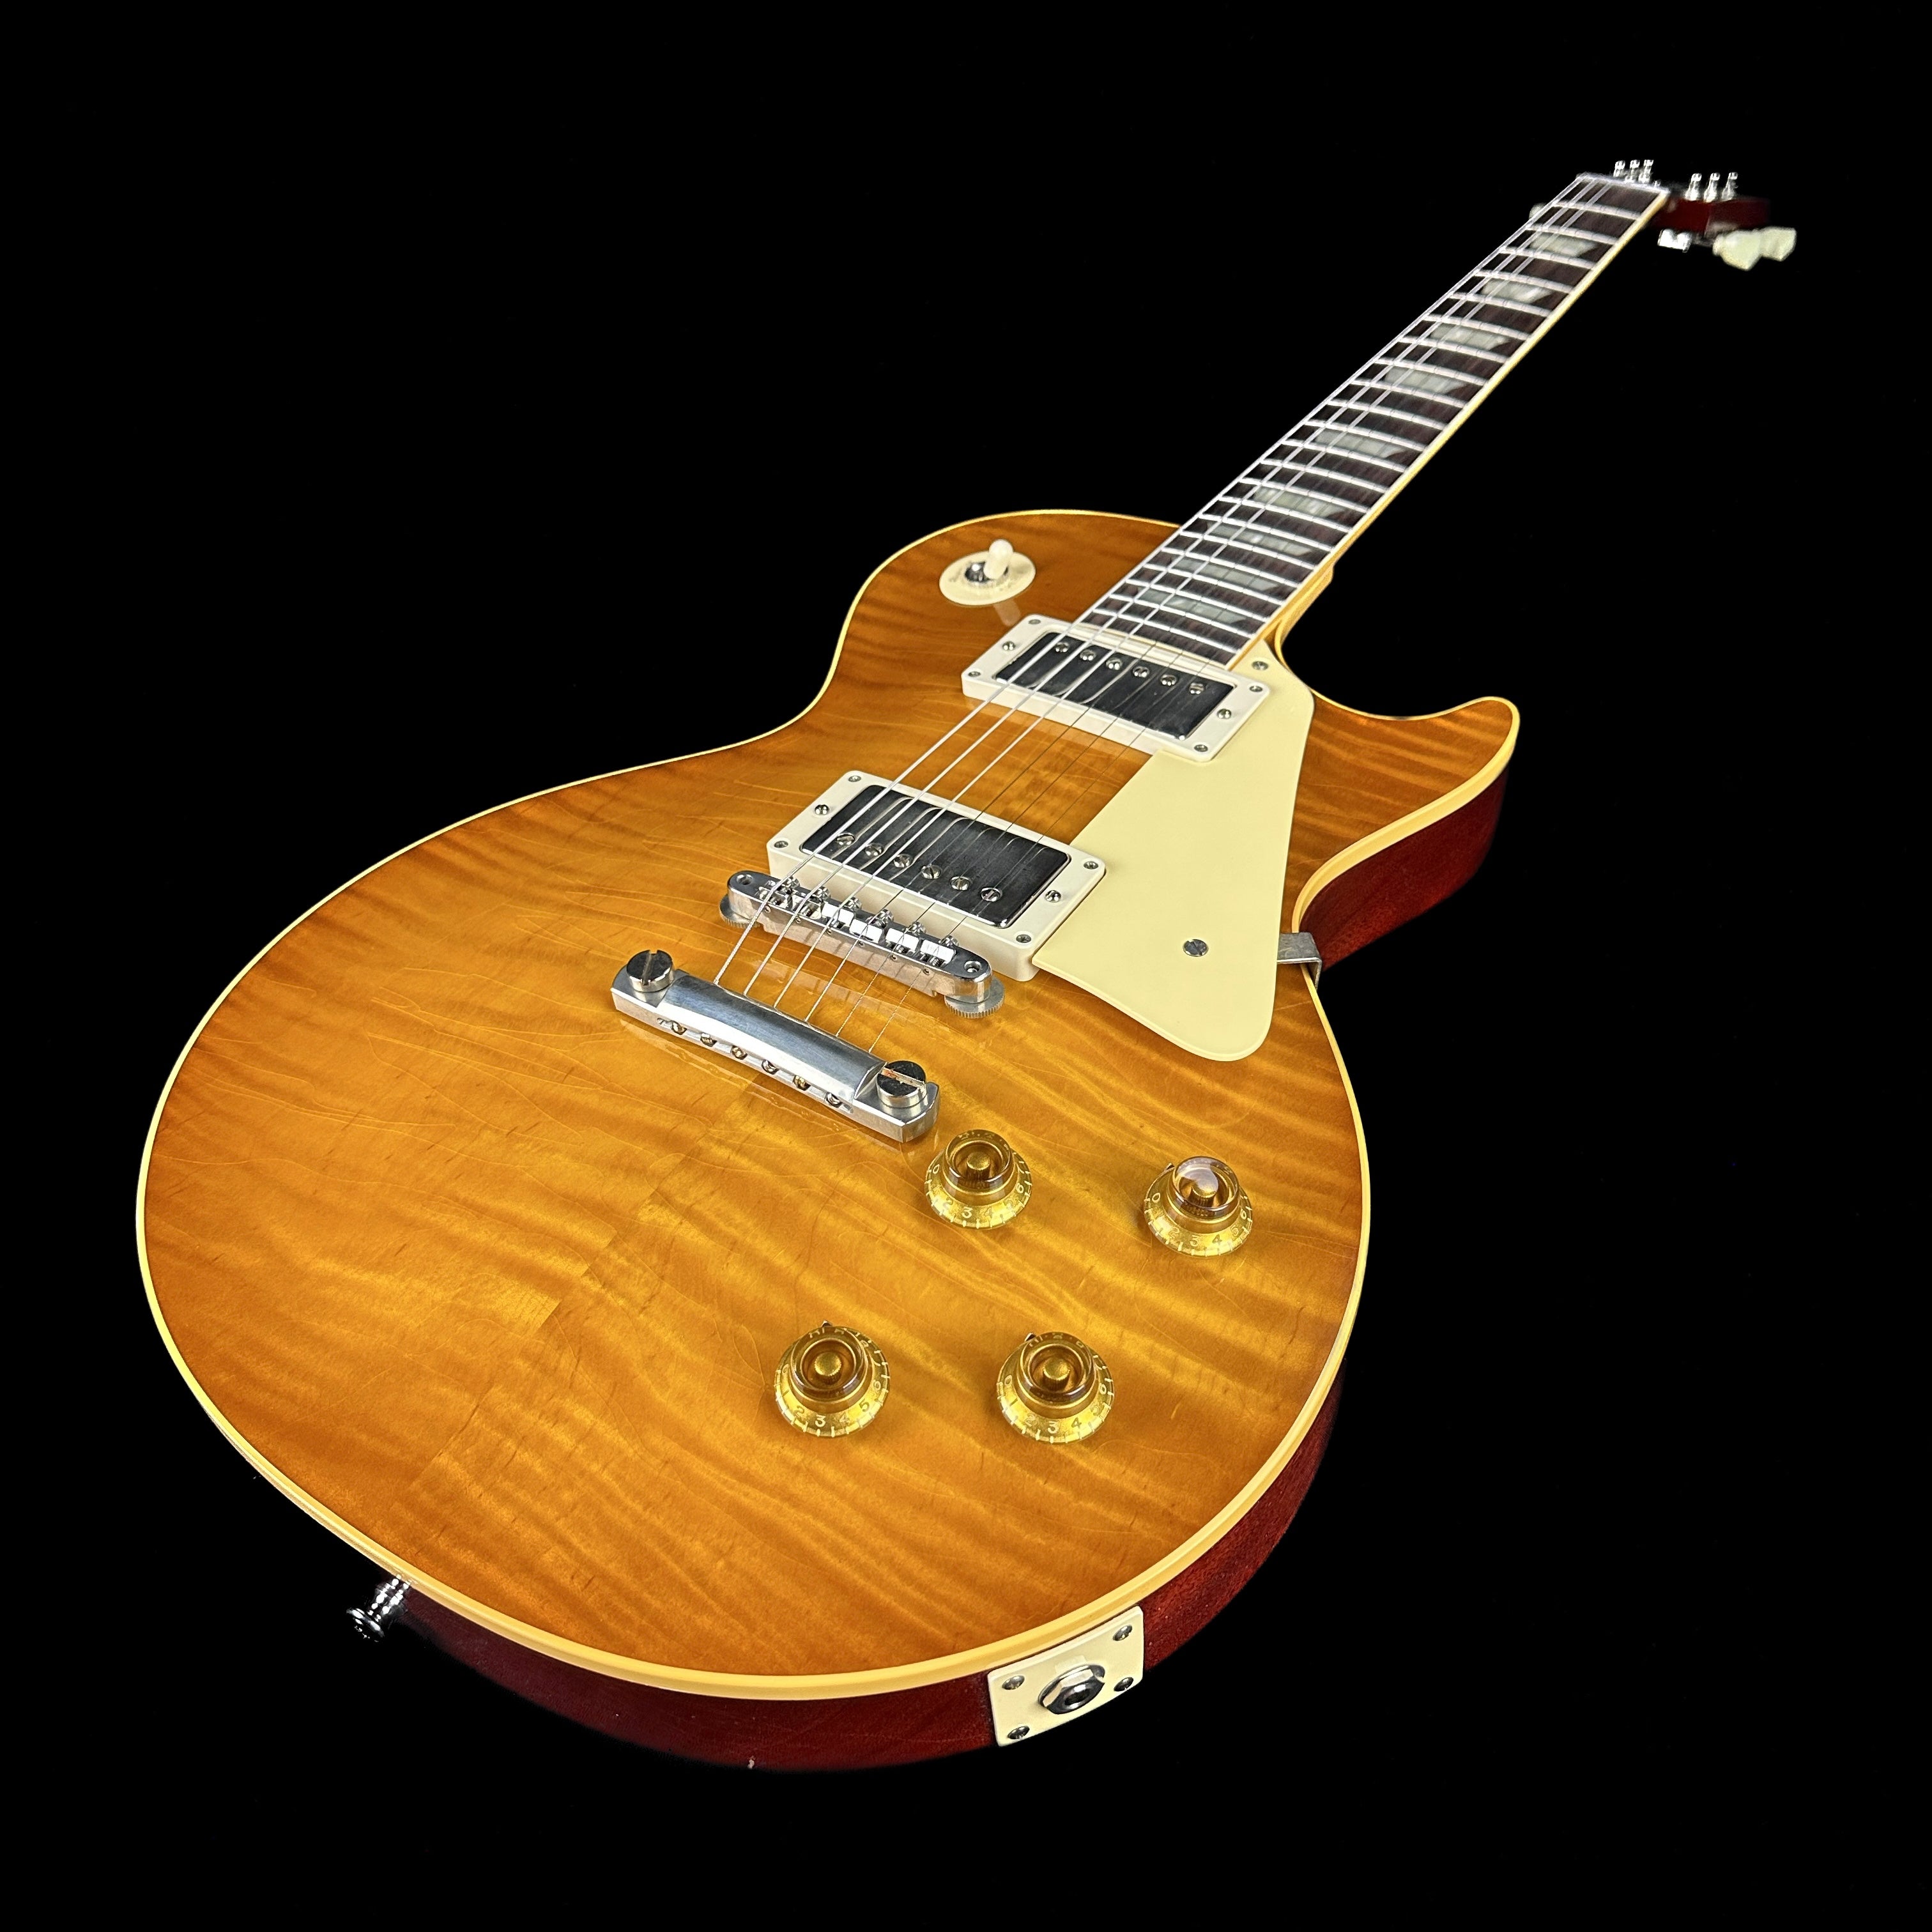 Gibson Custom - Online Shop | Tone Shop Guitars – Page 2